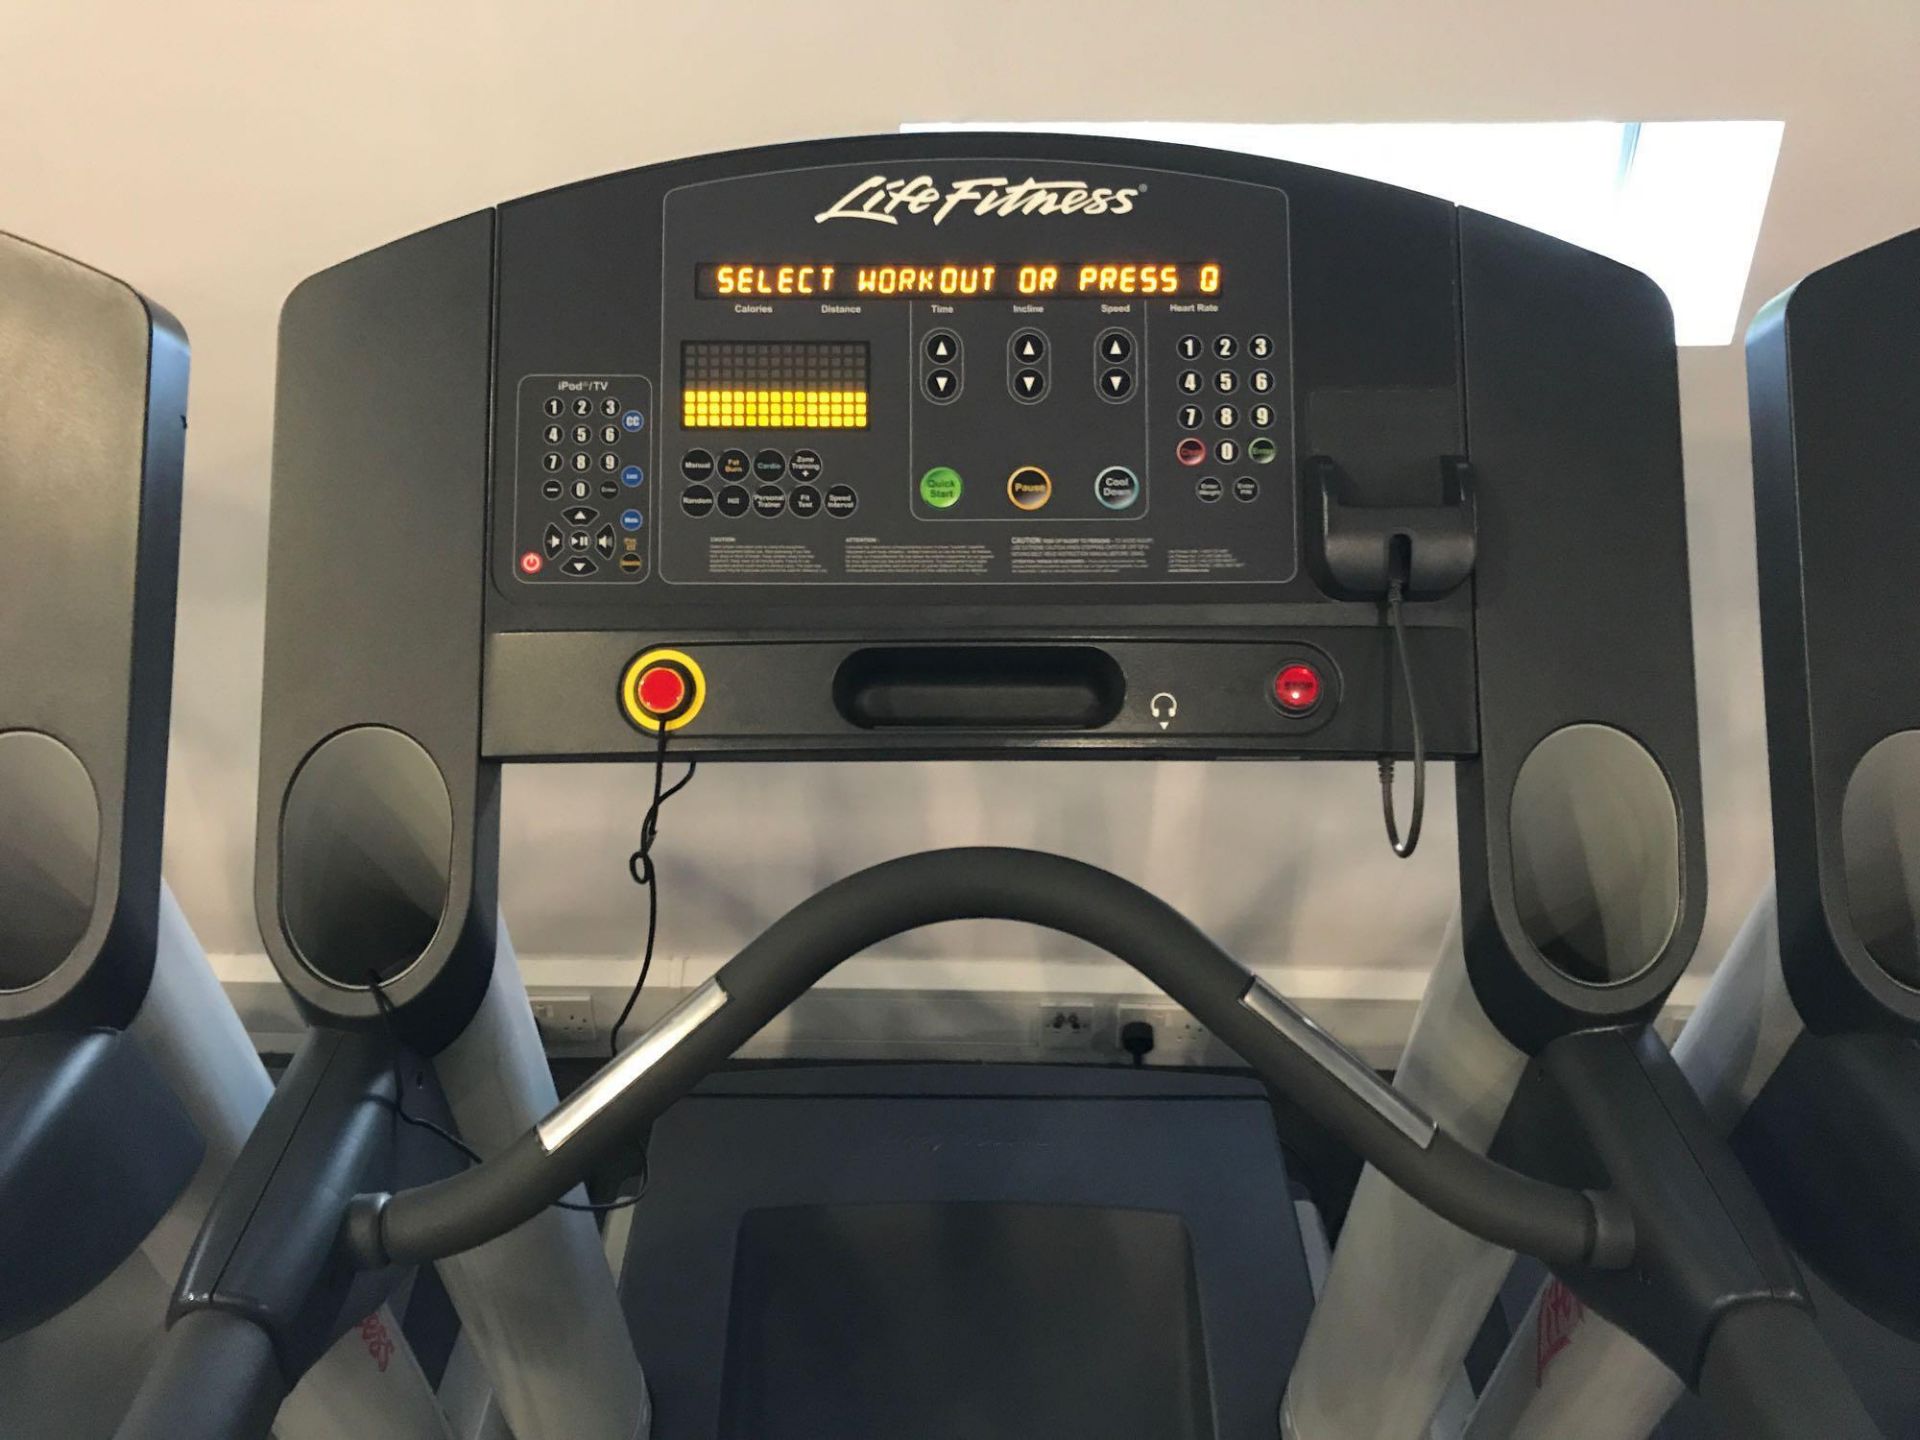 x1 Life fitness treadmill - Image 2 of 3